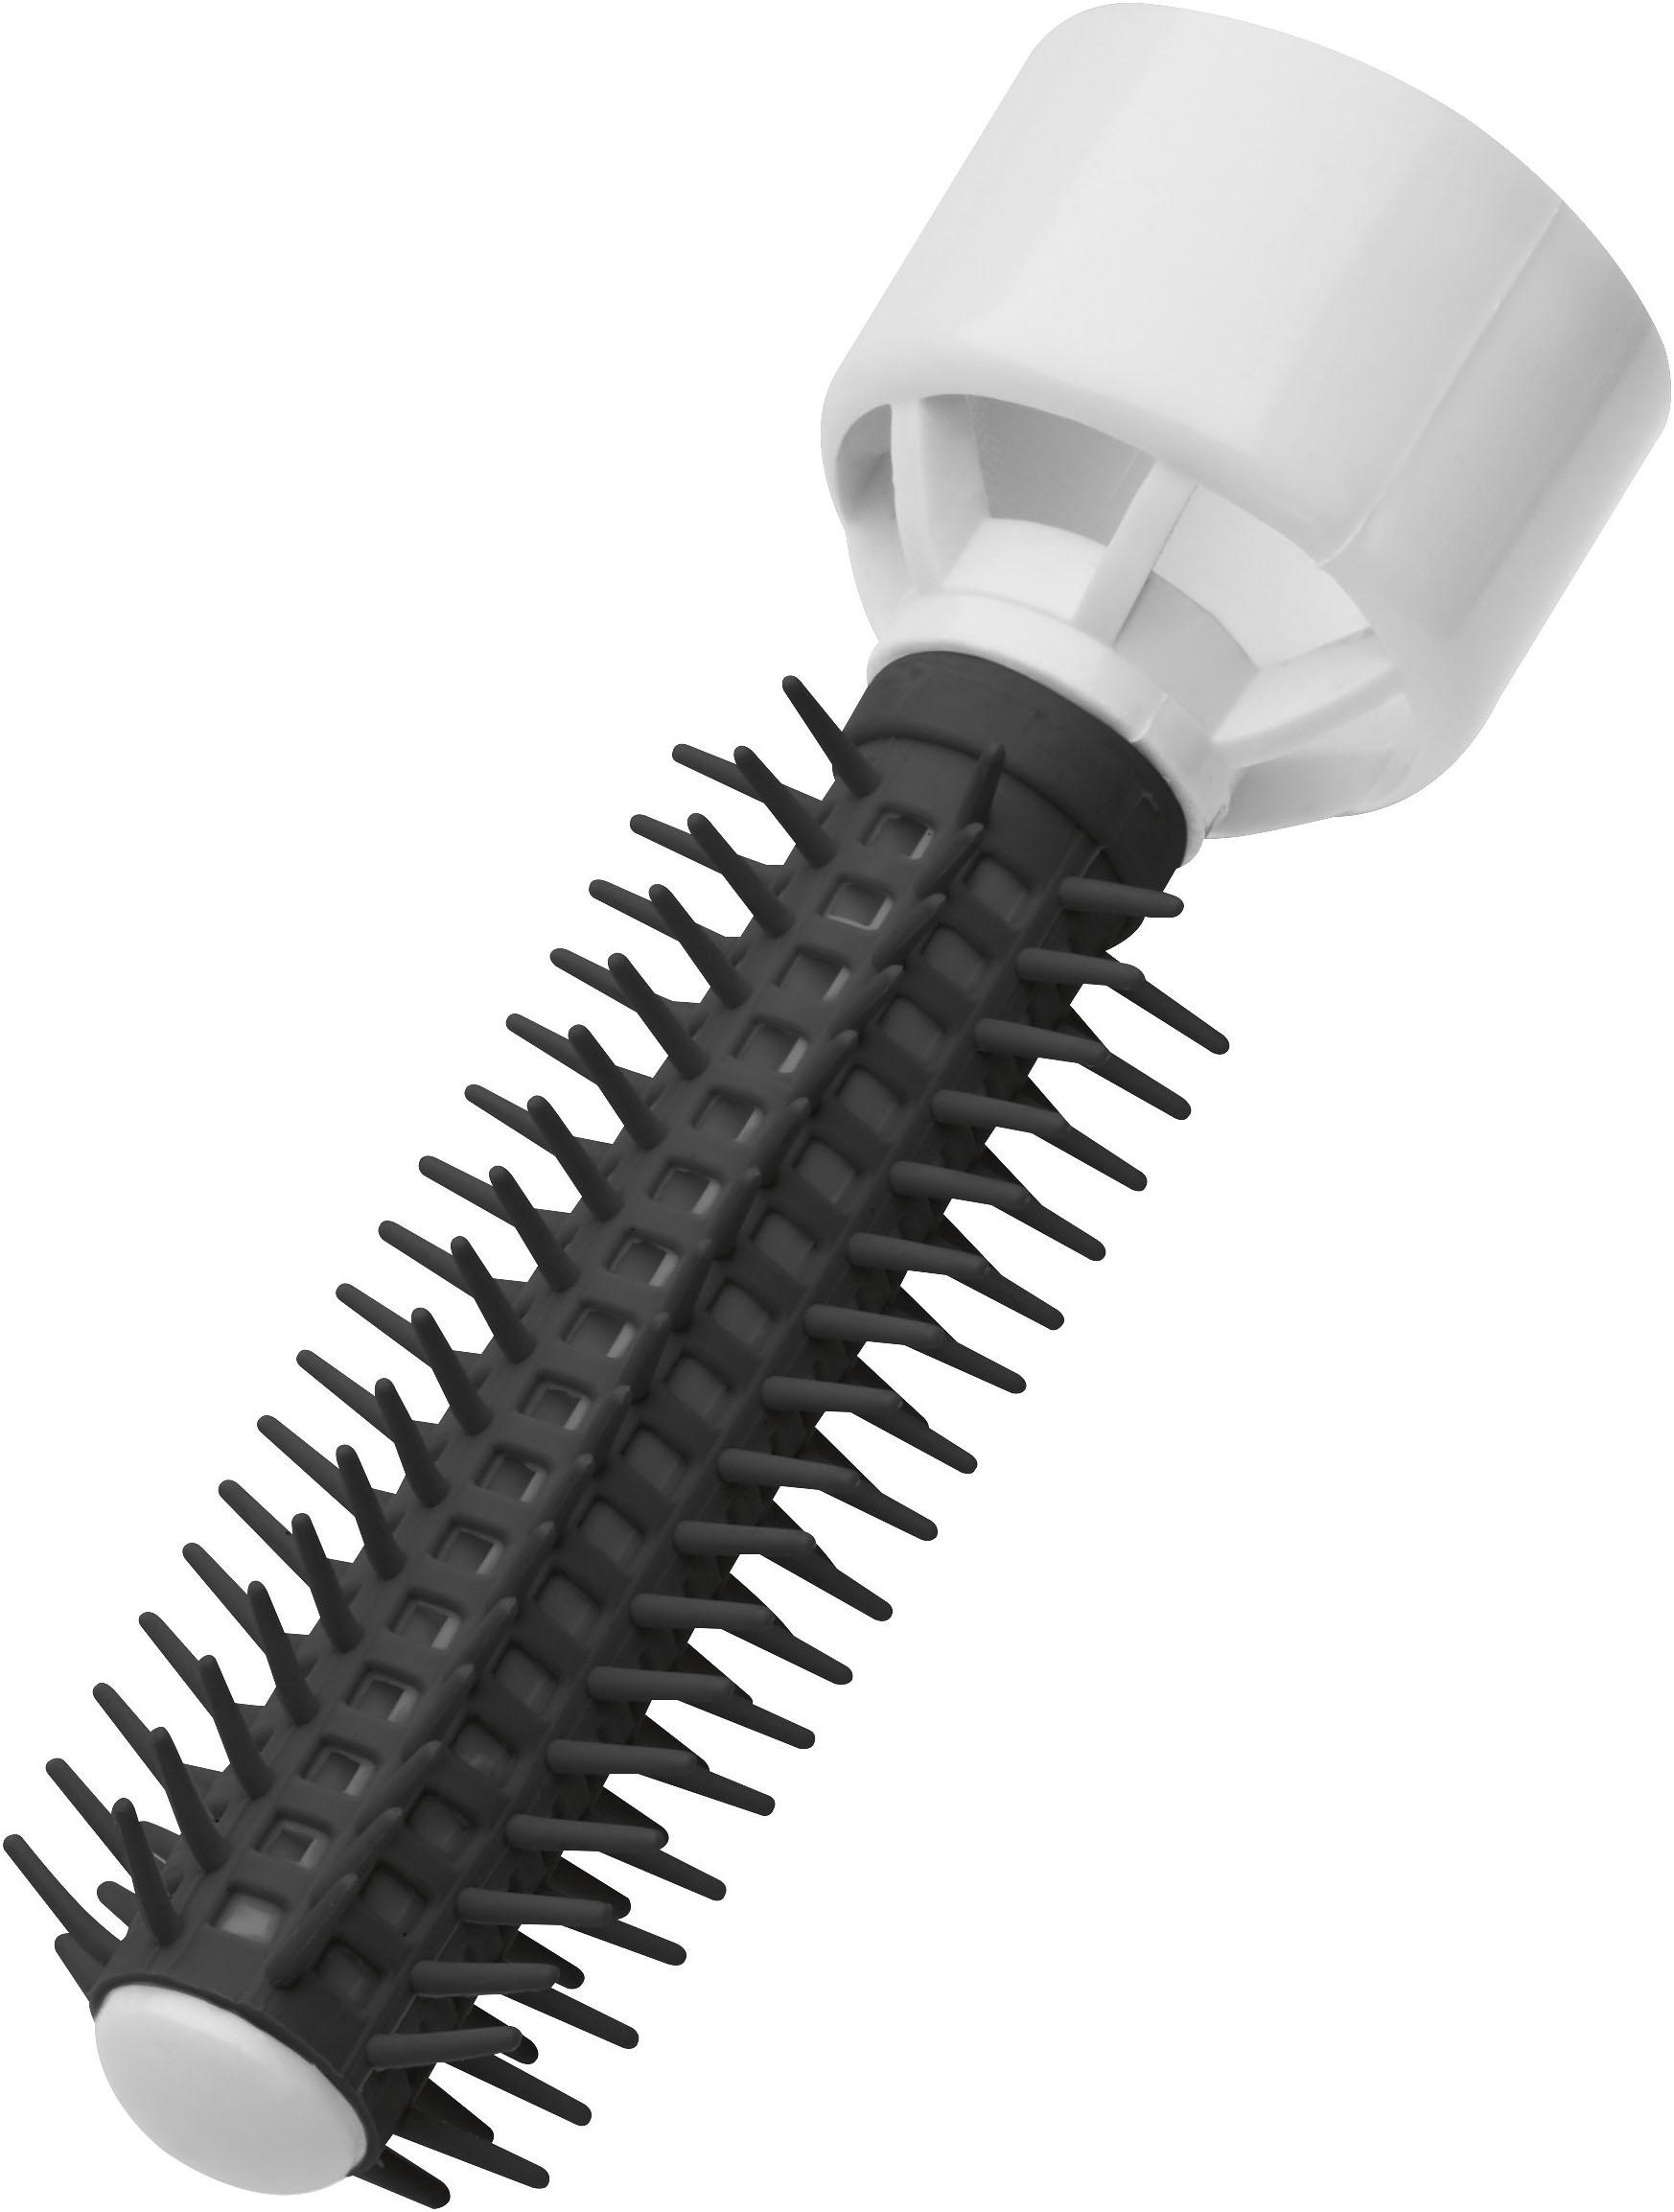 ProfiCare Haartrockenhaube »PC-HTH 3003«, 400 W, 2 Aufsätze, Trockenhaube, Haartrockner + Lockenbürste in Einem